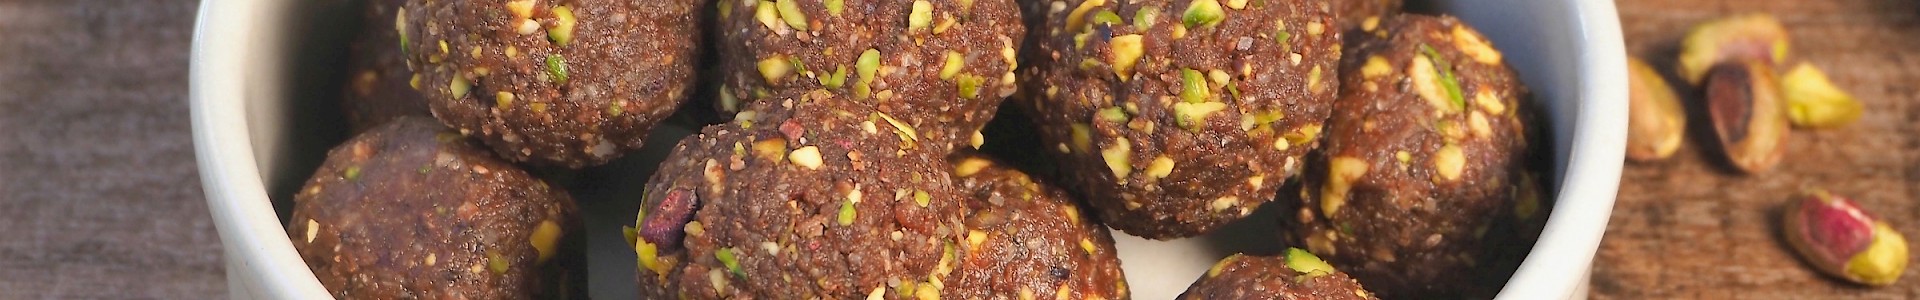 Chocolate Fudge Bites with Pistachio Chips